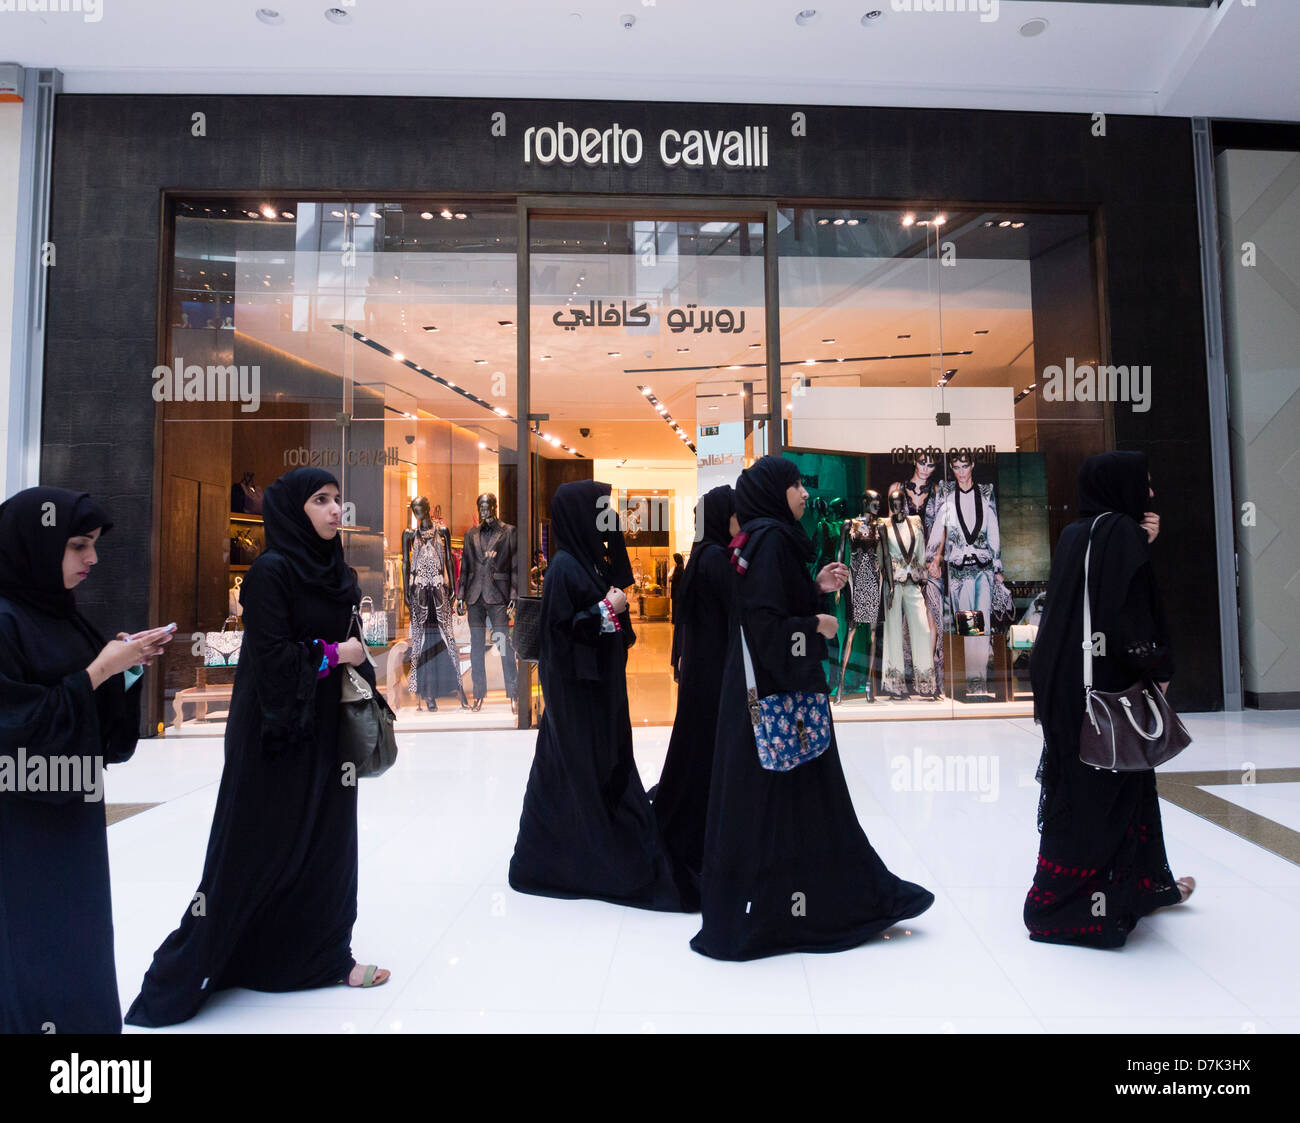 Roberto Cavalli boutique and shoppers at The Dubai Mall in Dubai United Arab Emirates Stock Photo